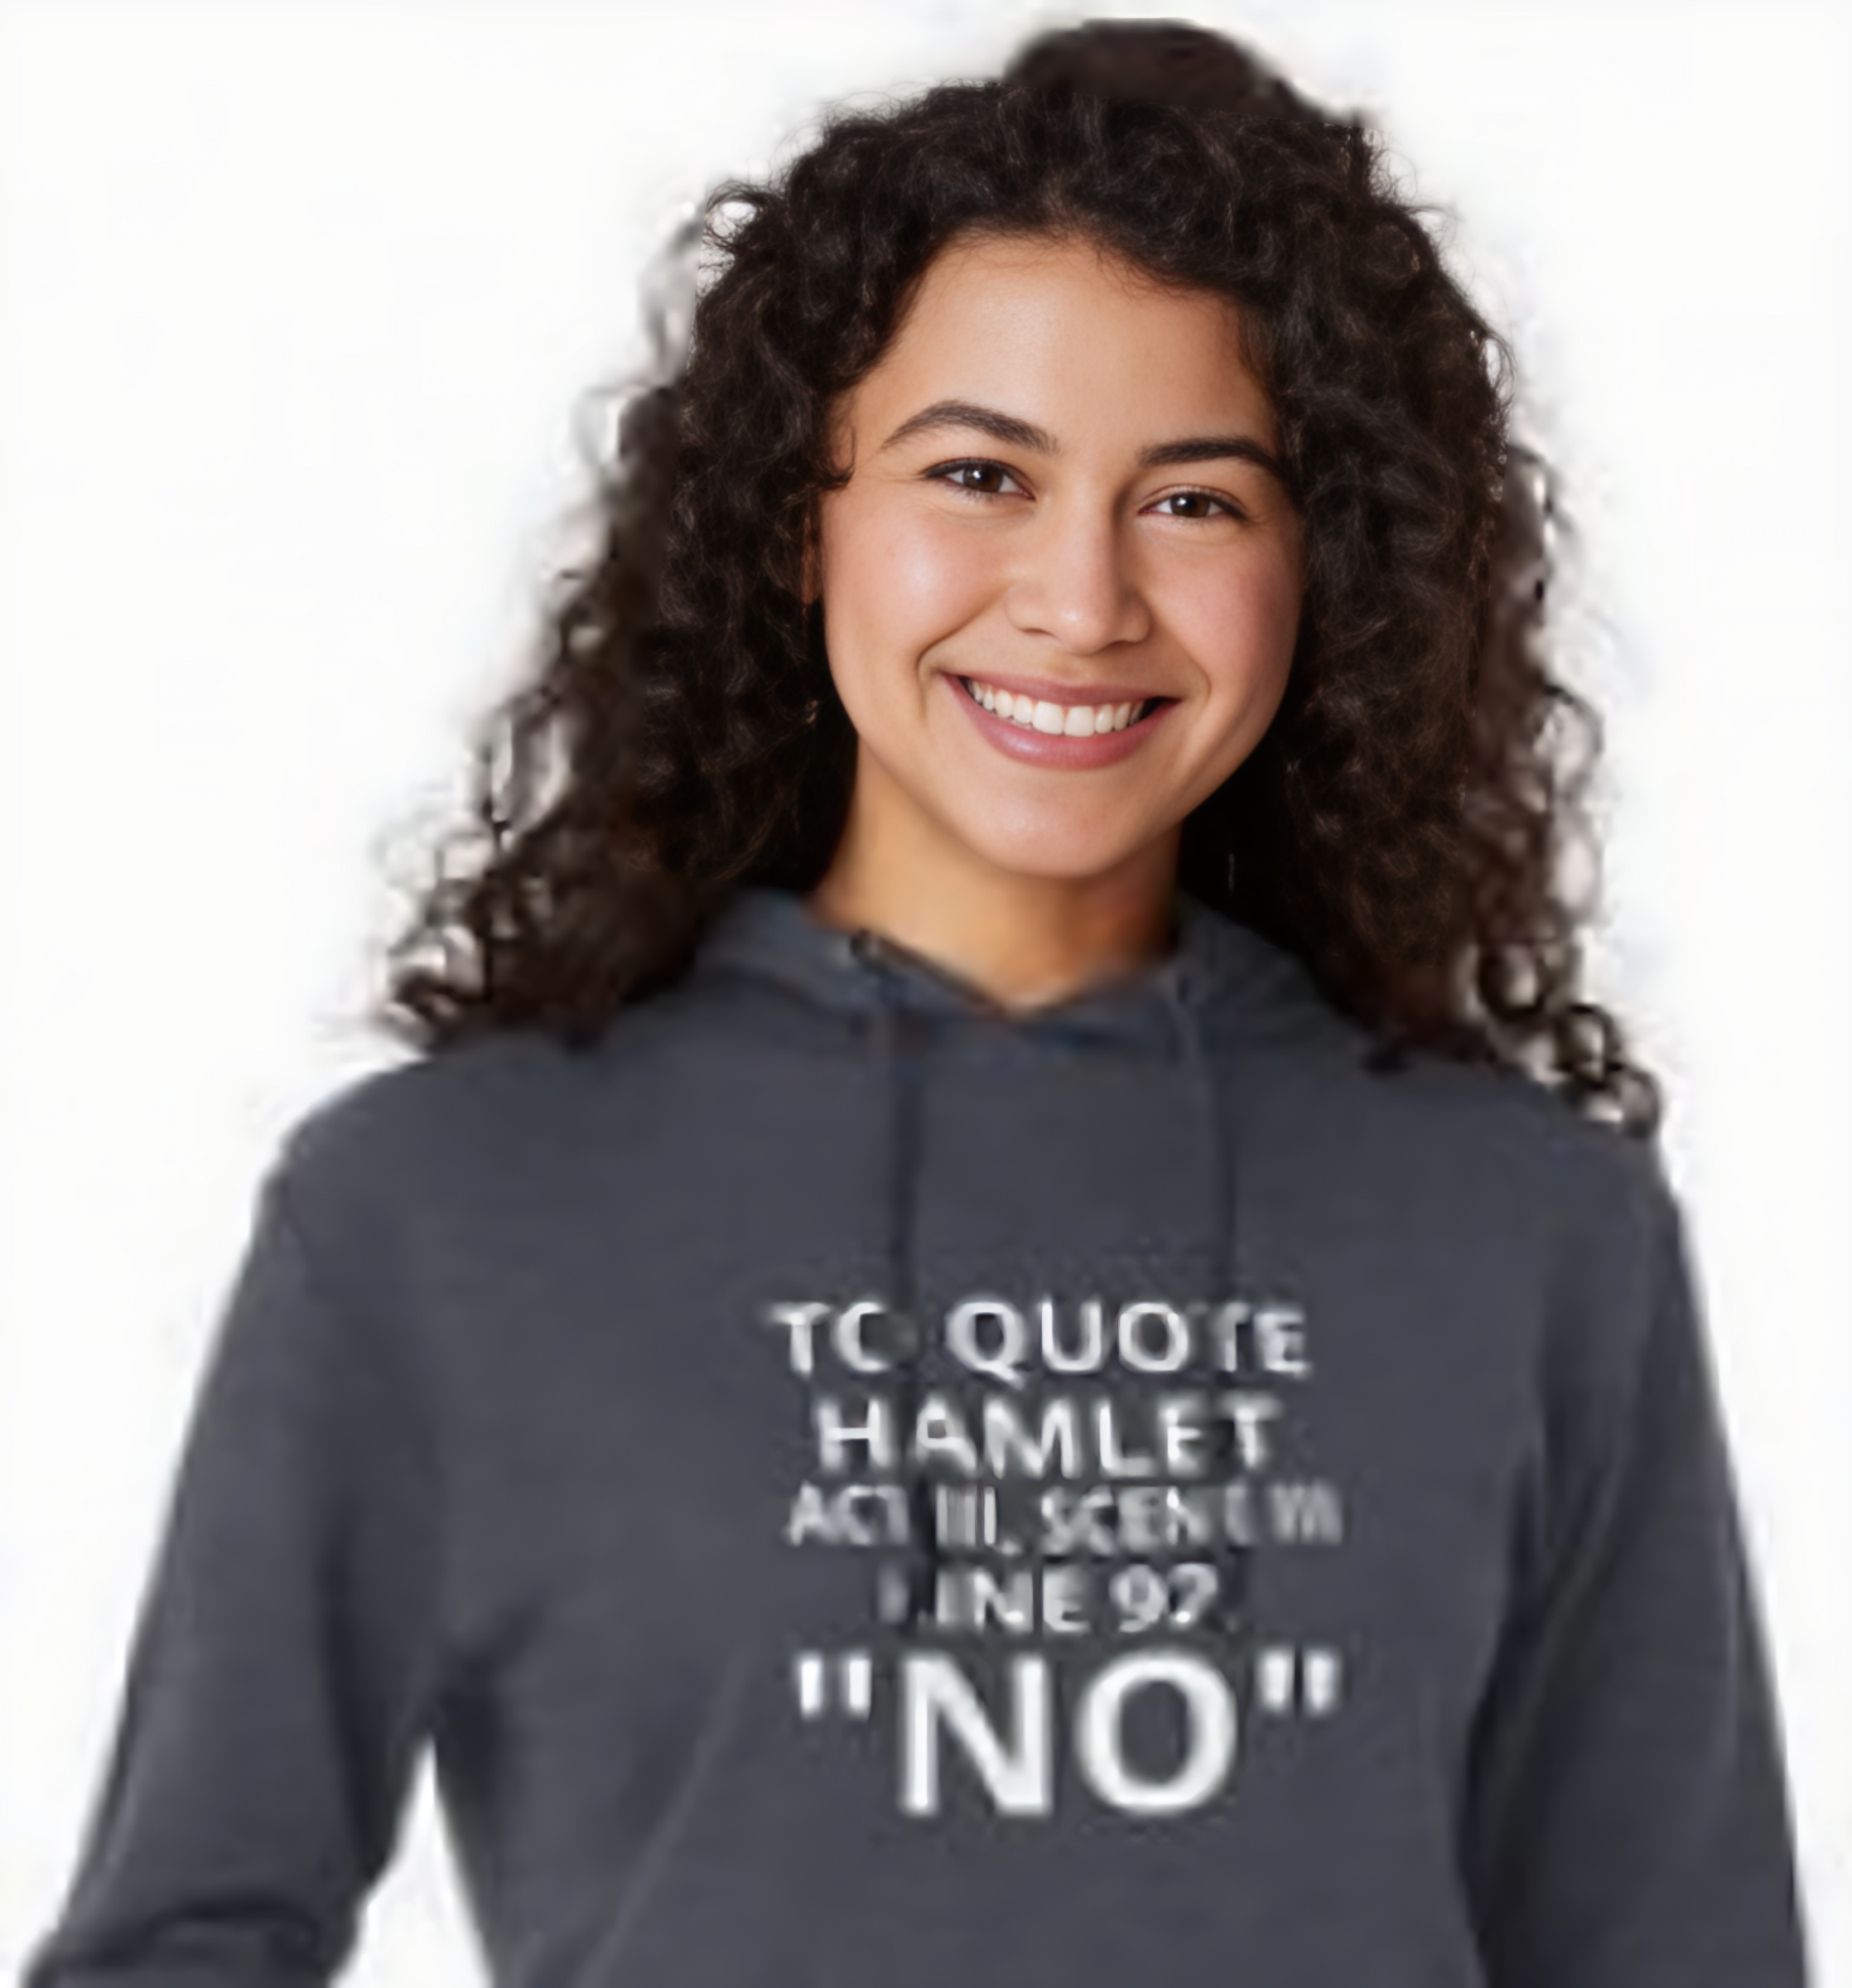 Hamlet Swag Store: Hamlet Hoodies and Sweatshirts